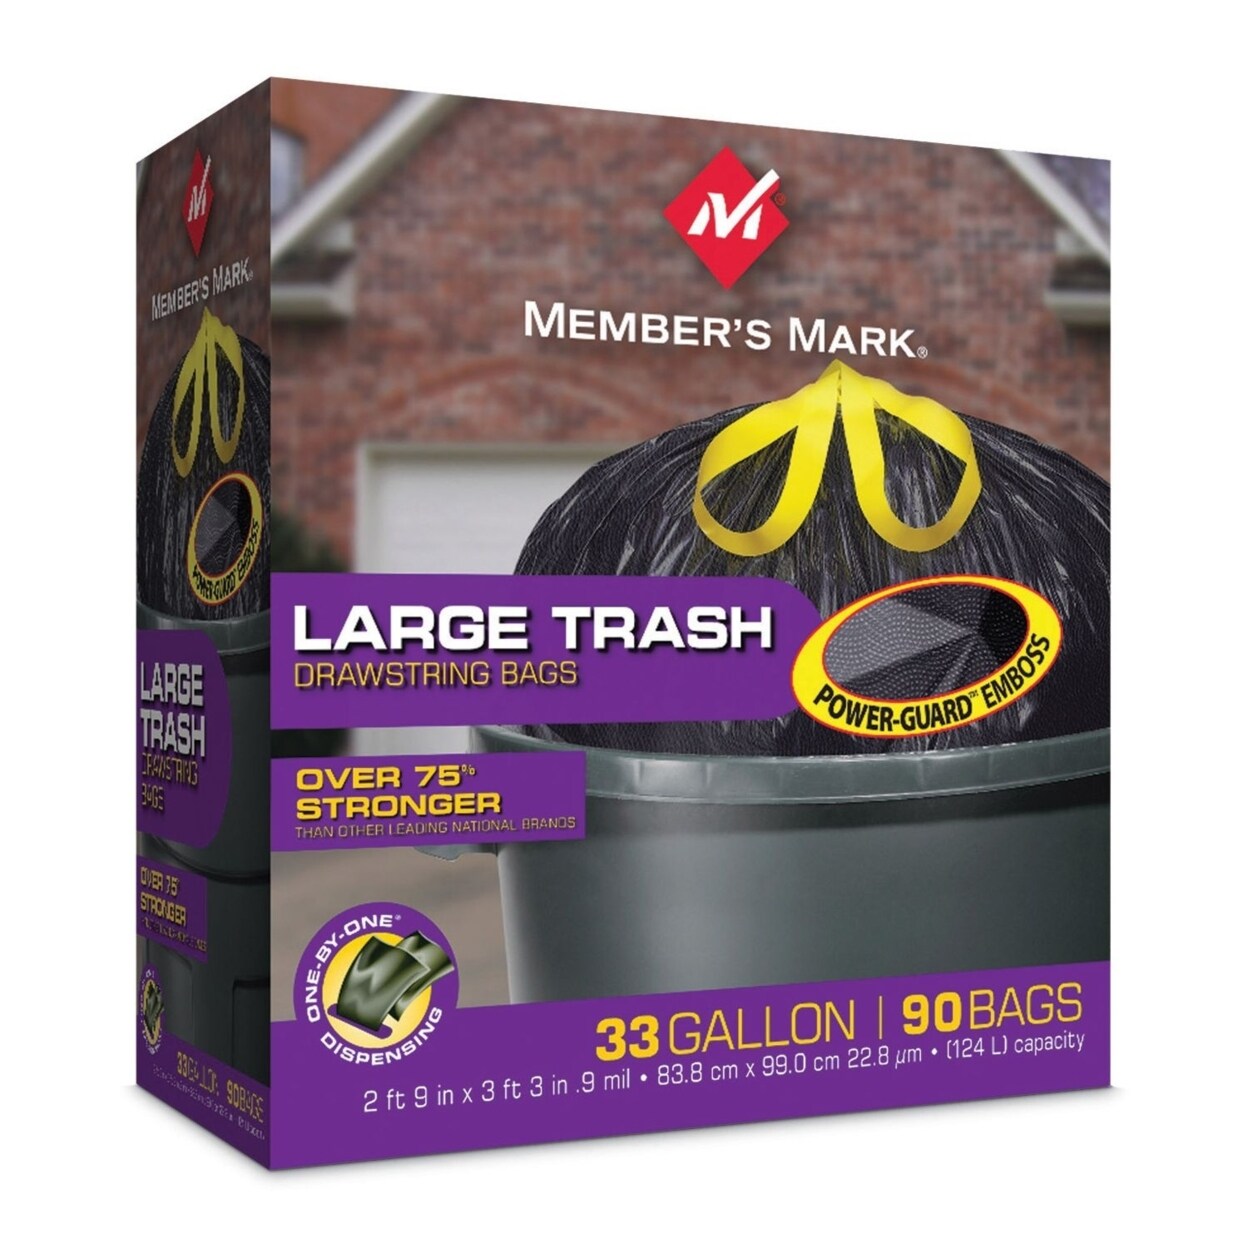 Trash Liners - 33 Gallon, Purple